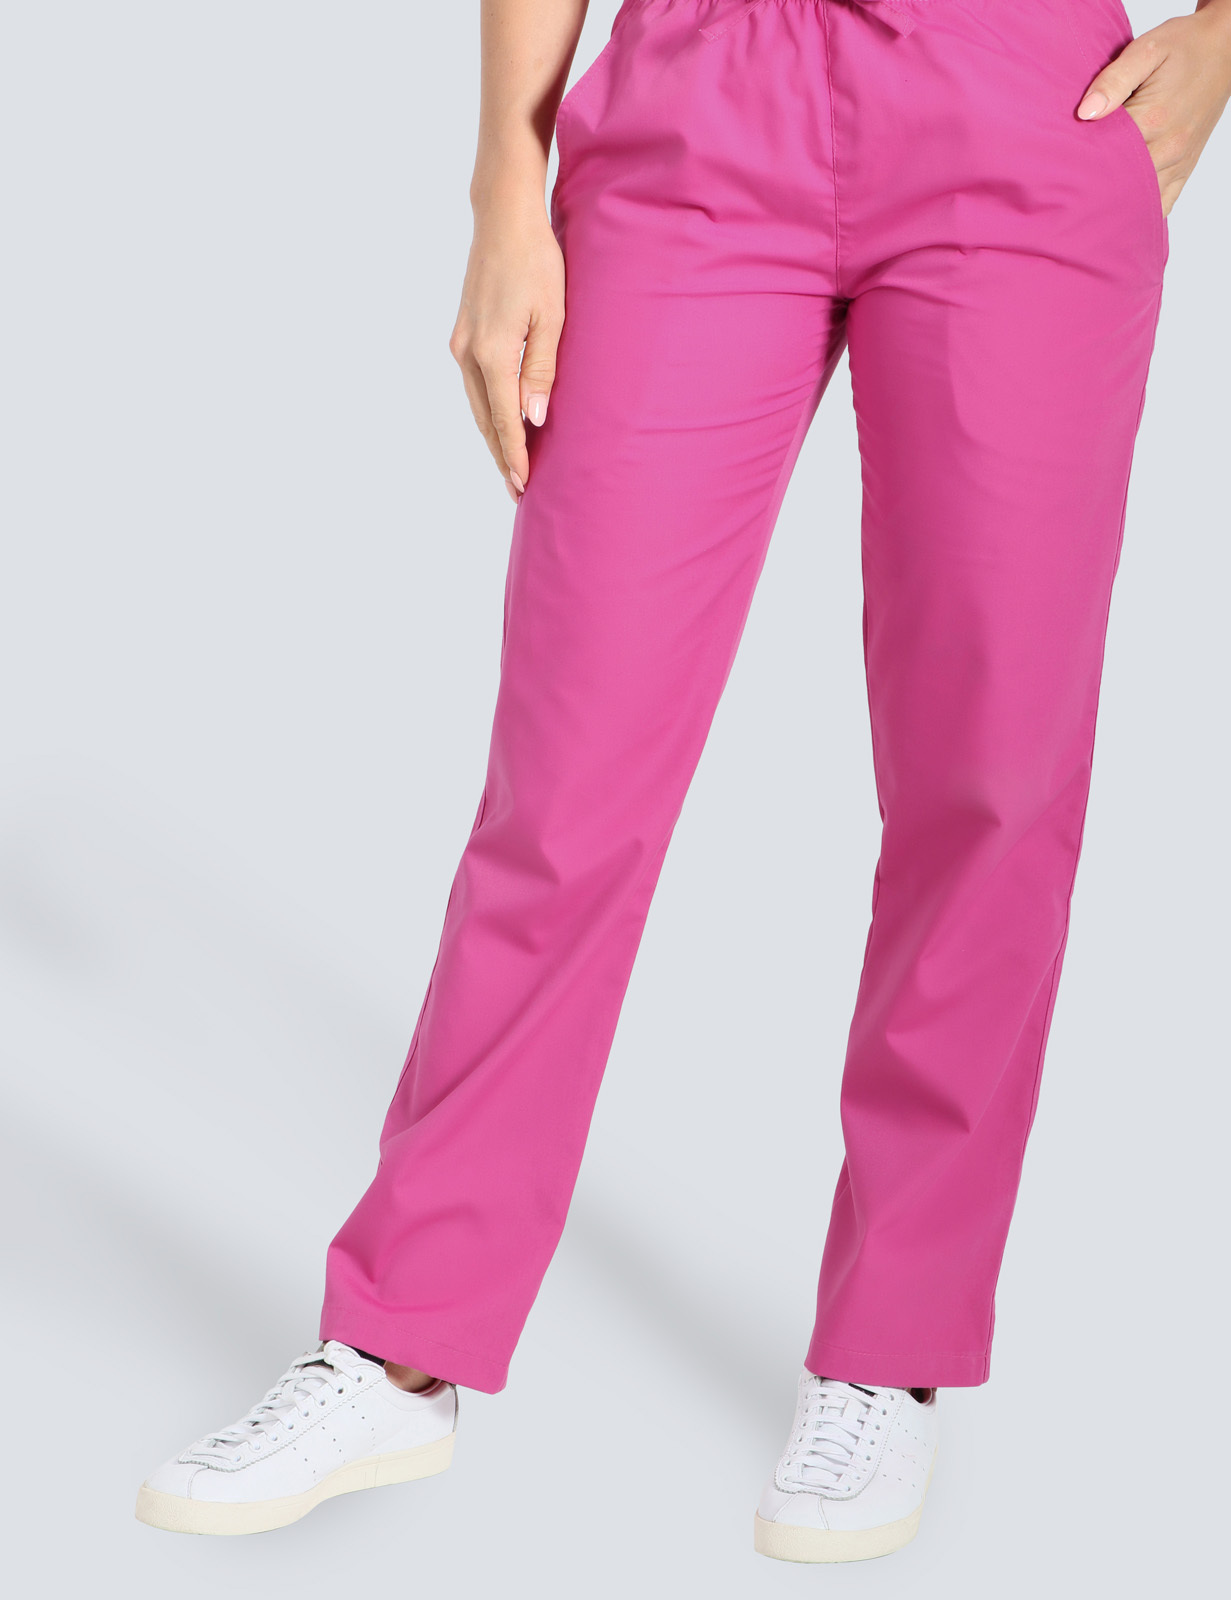 Women's Regular Cut Pants - Pink - 3X Large